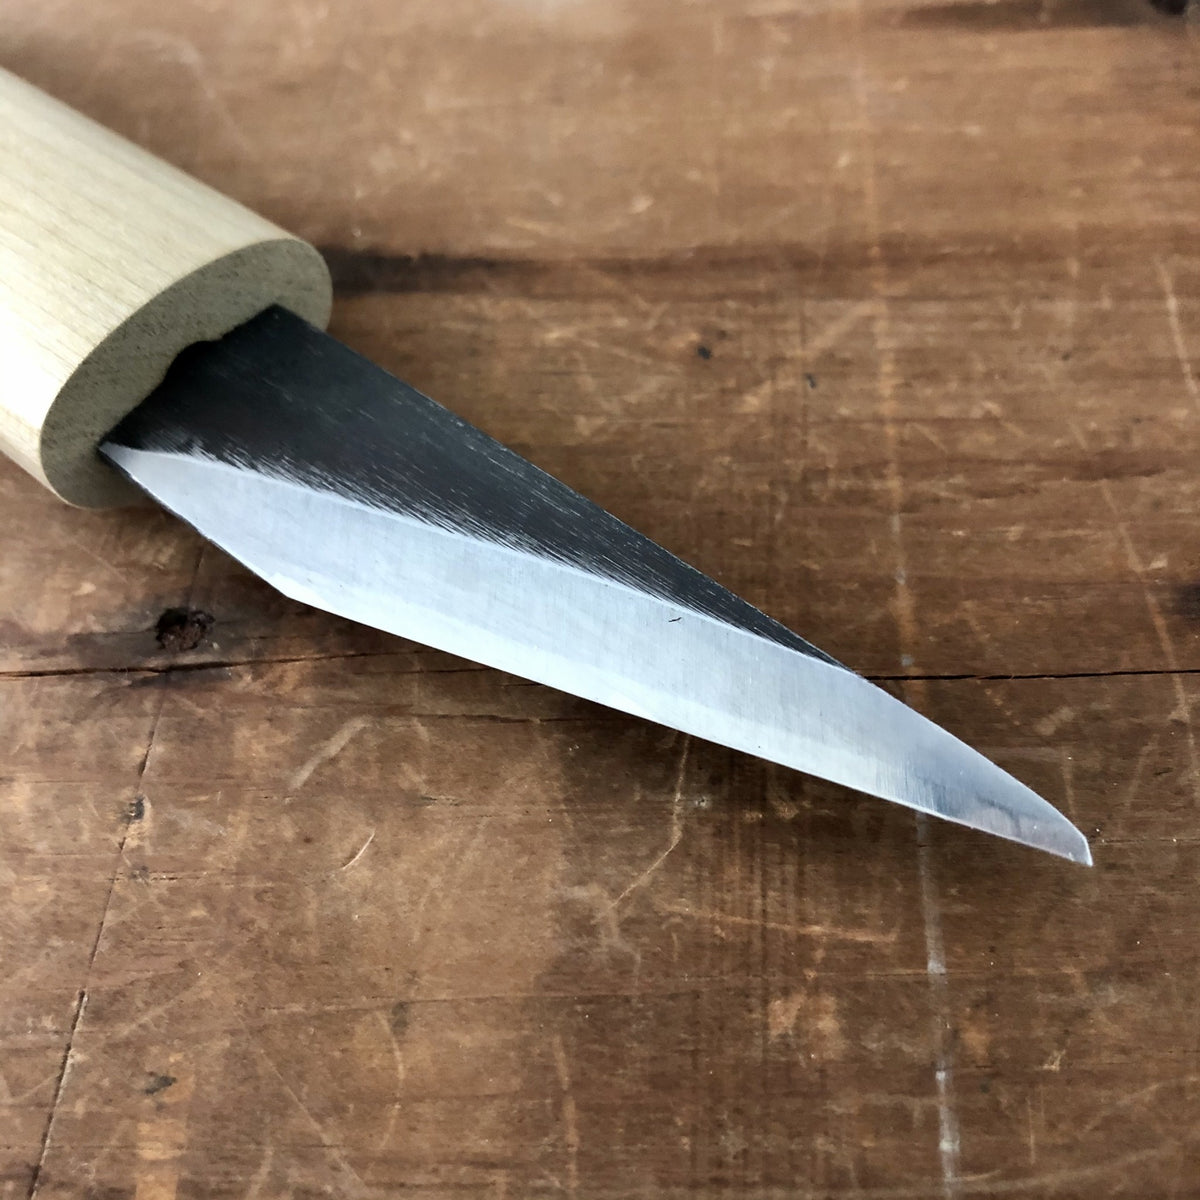 Baishinshi 20mm Kiridashi Carving Knife Carbon Steel Wooden Handle with Saya